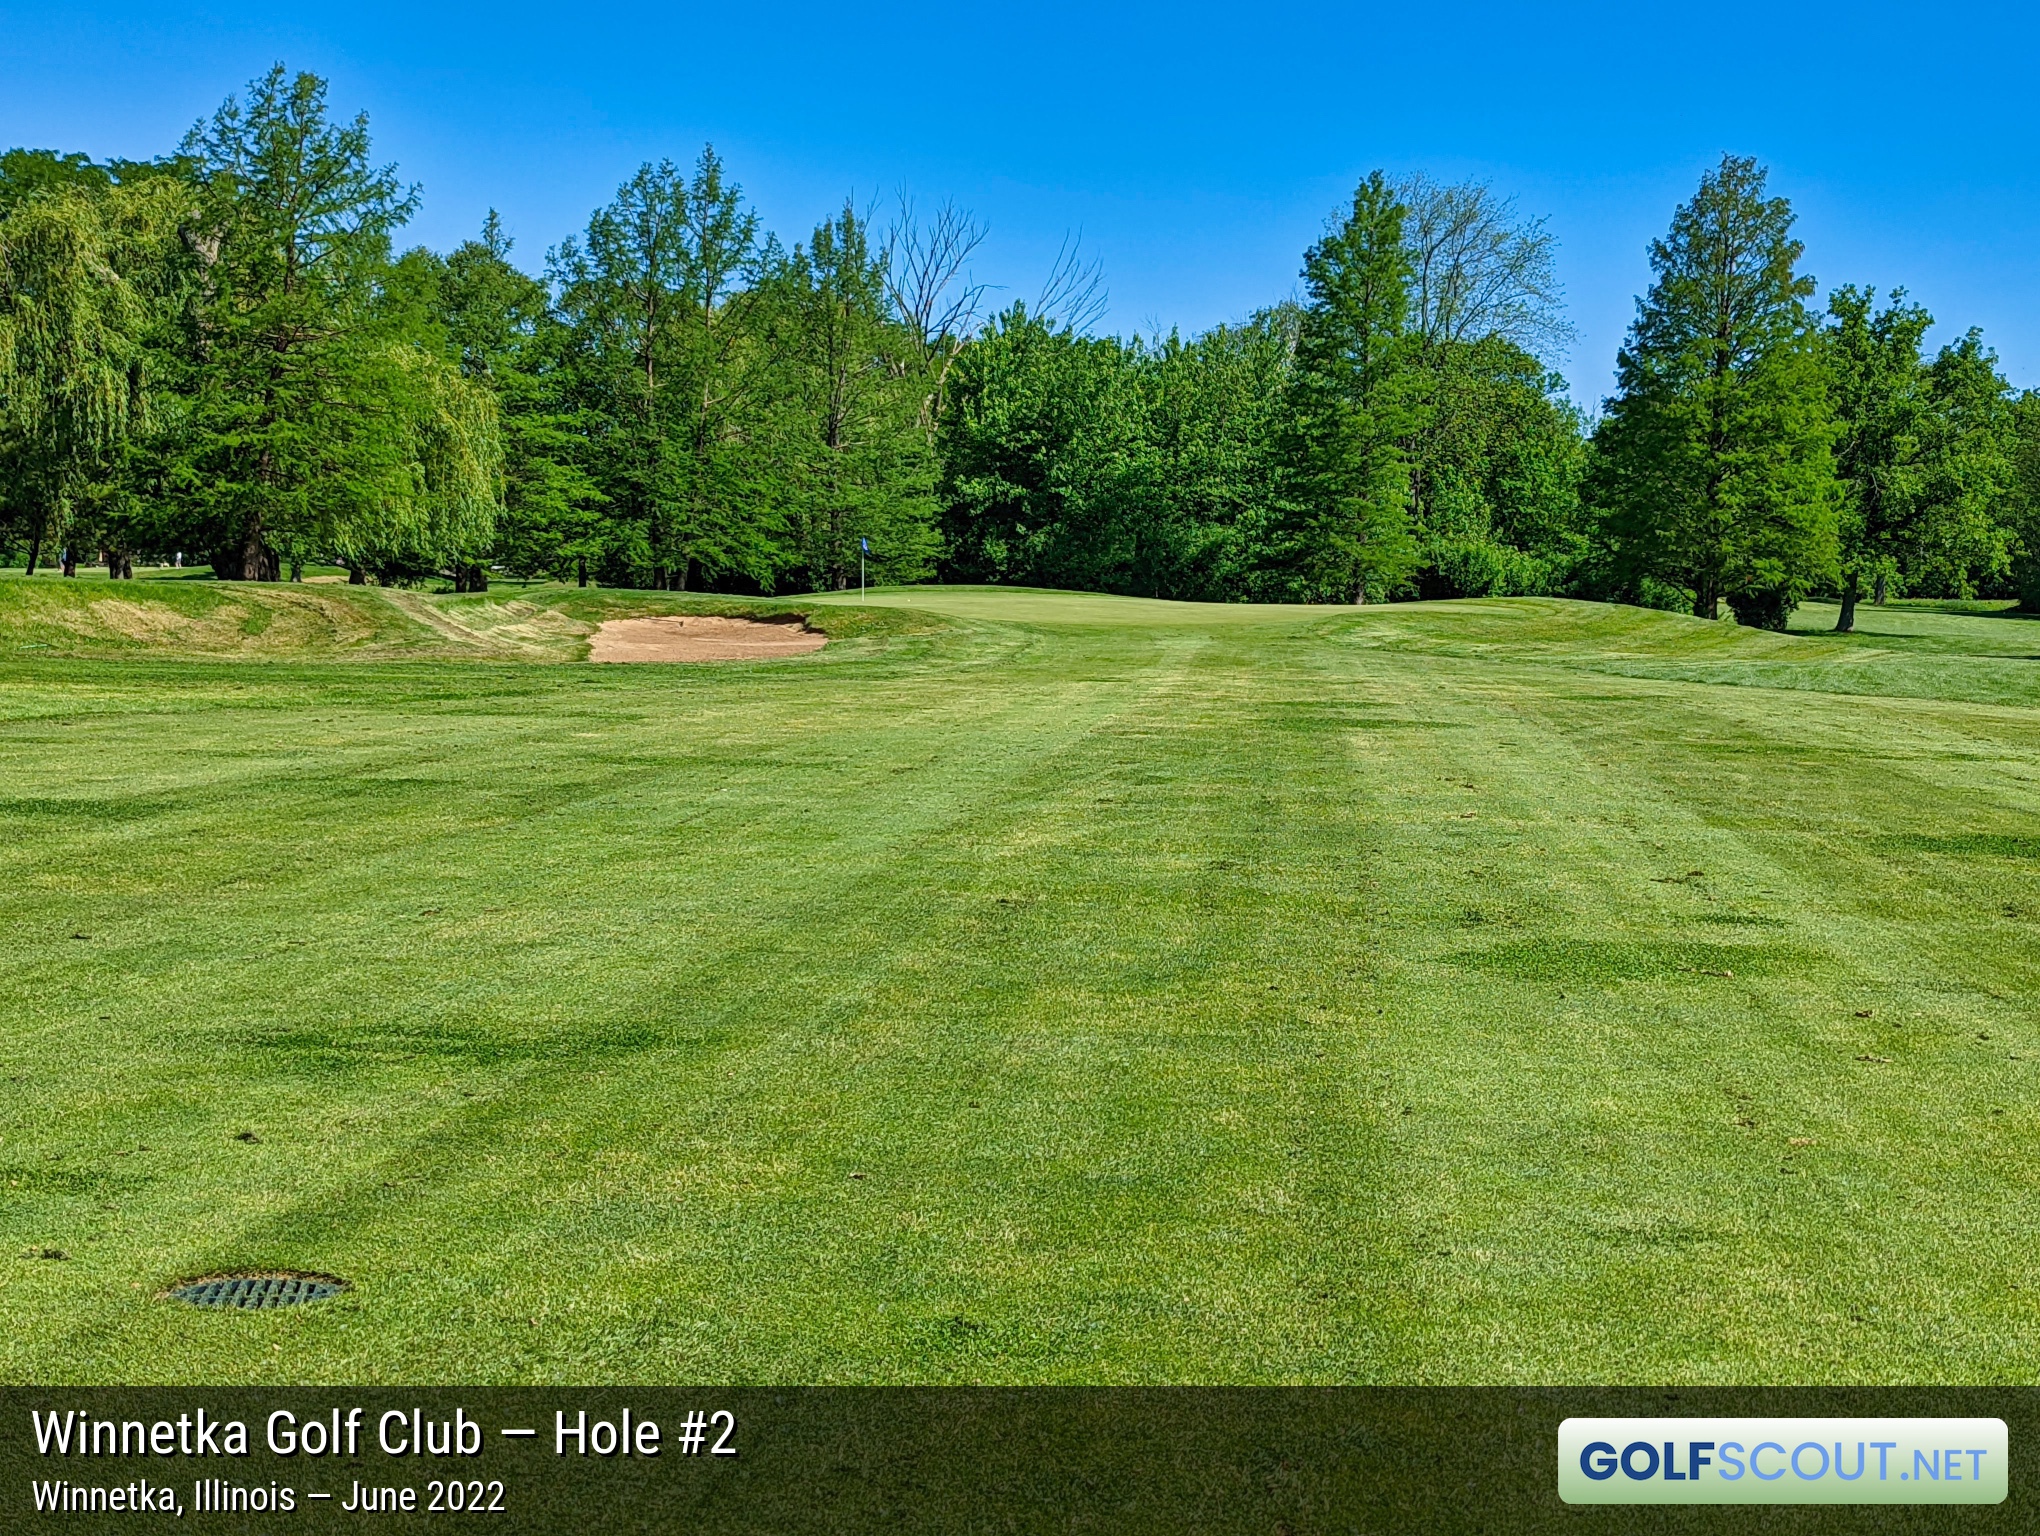 Photo of hole #2 at Winnetka Golf Club in Winnetka, Illinois. 